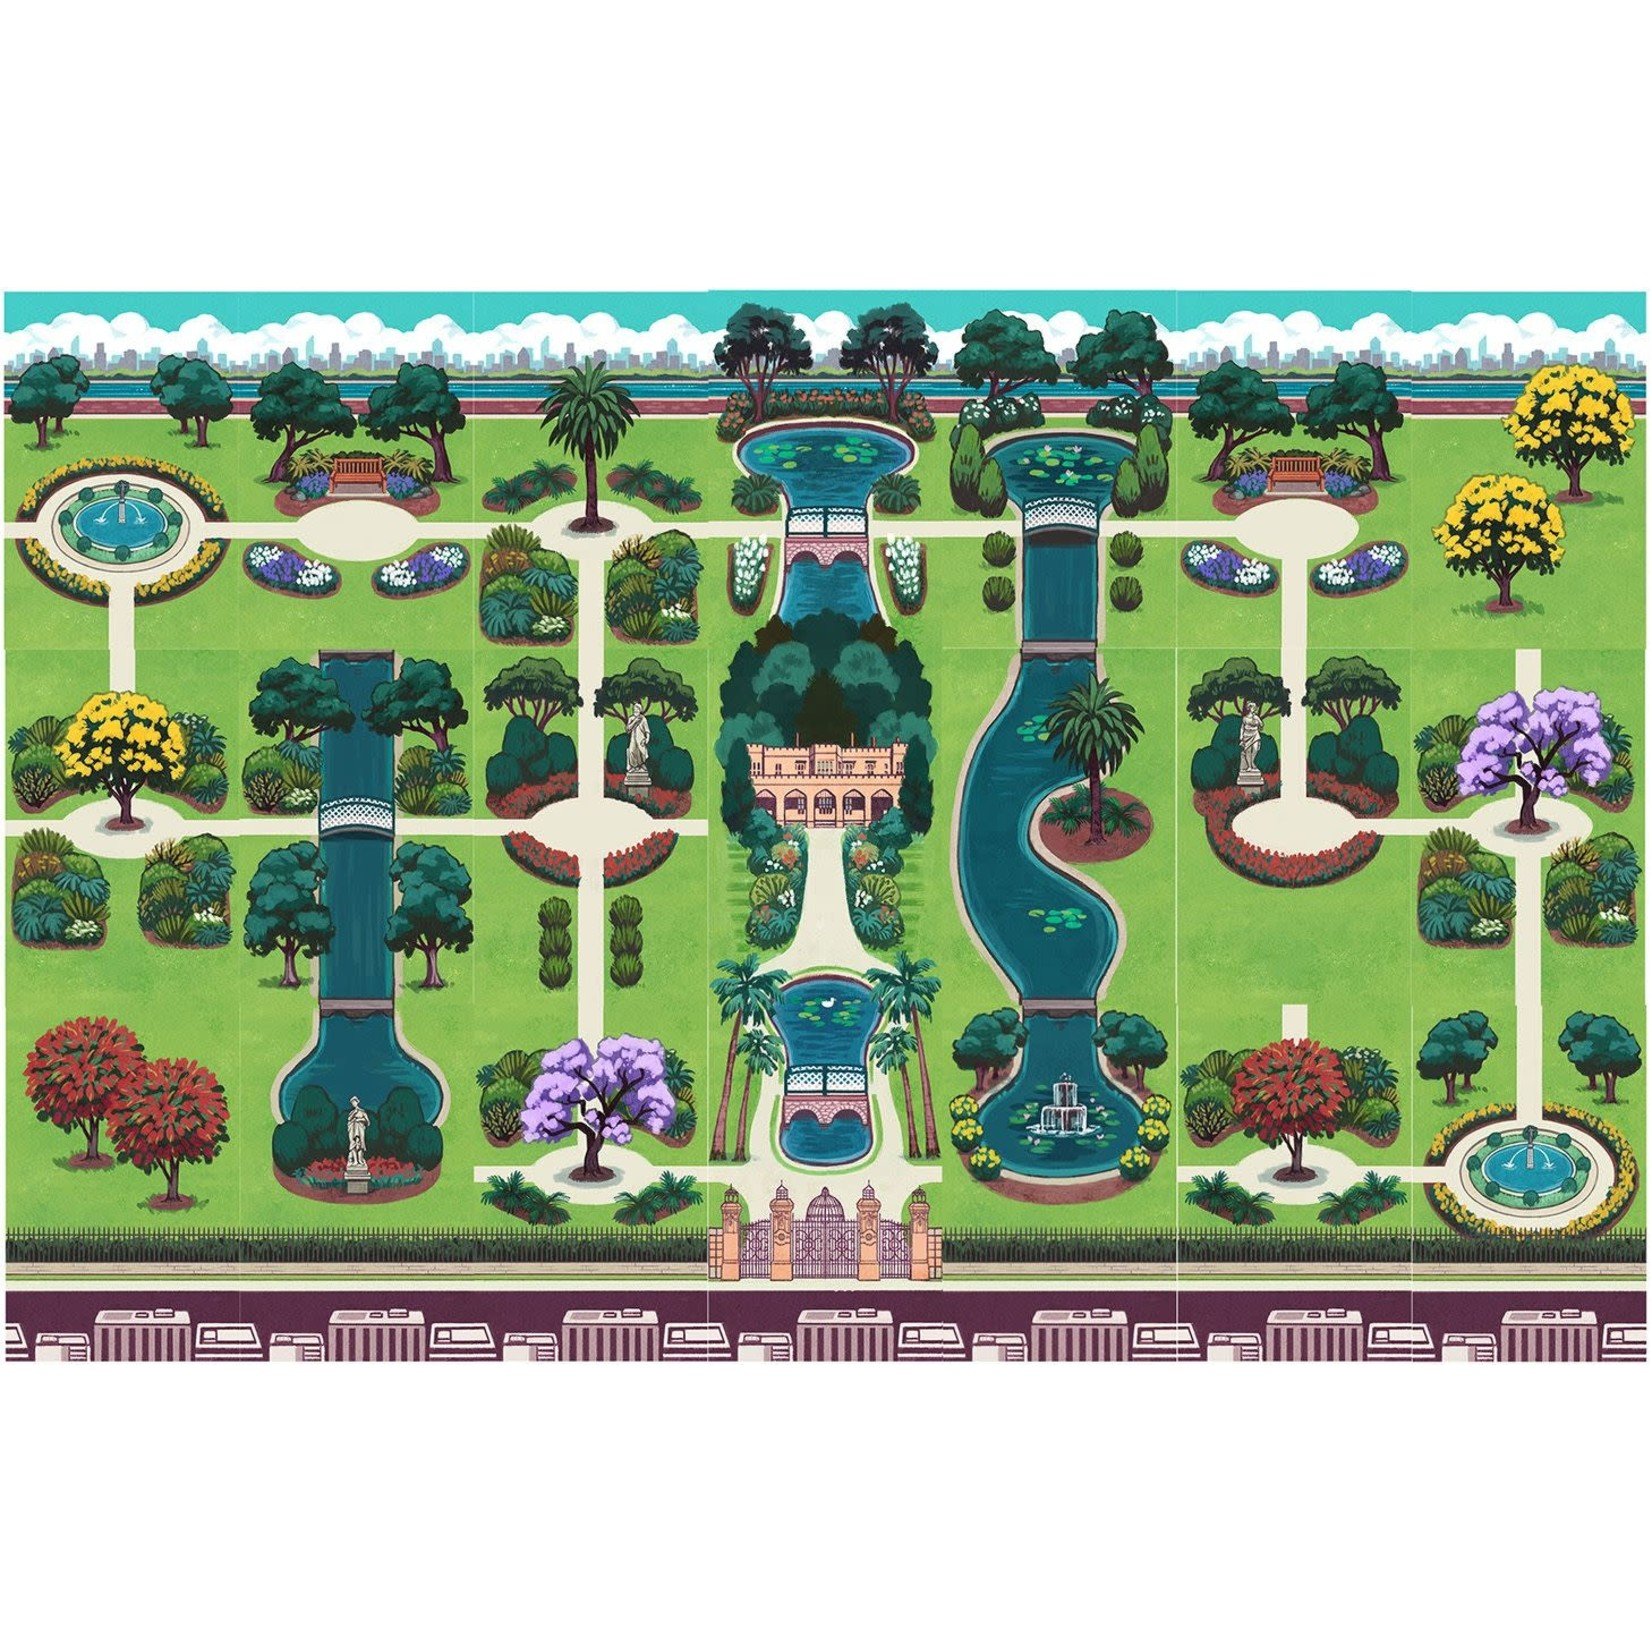 Grail Games The Gardens - A Walk in the Park (Botanist Bundle)